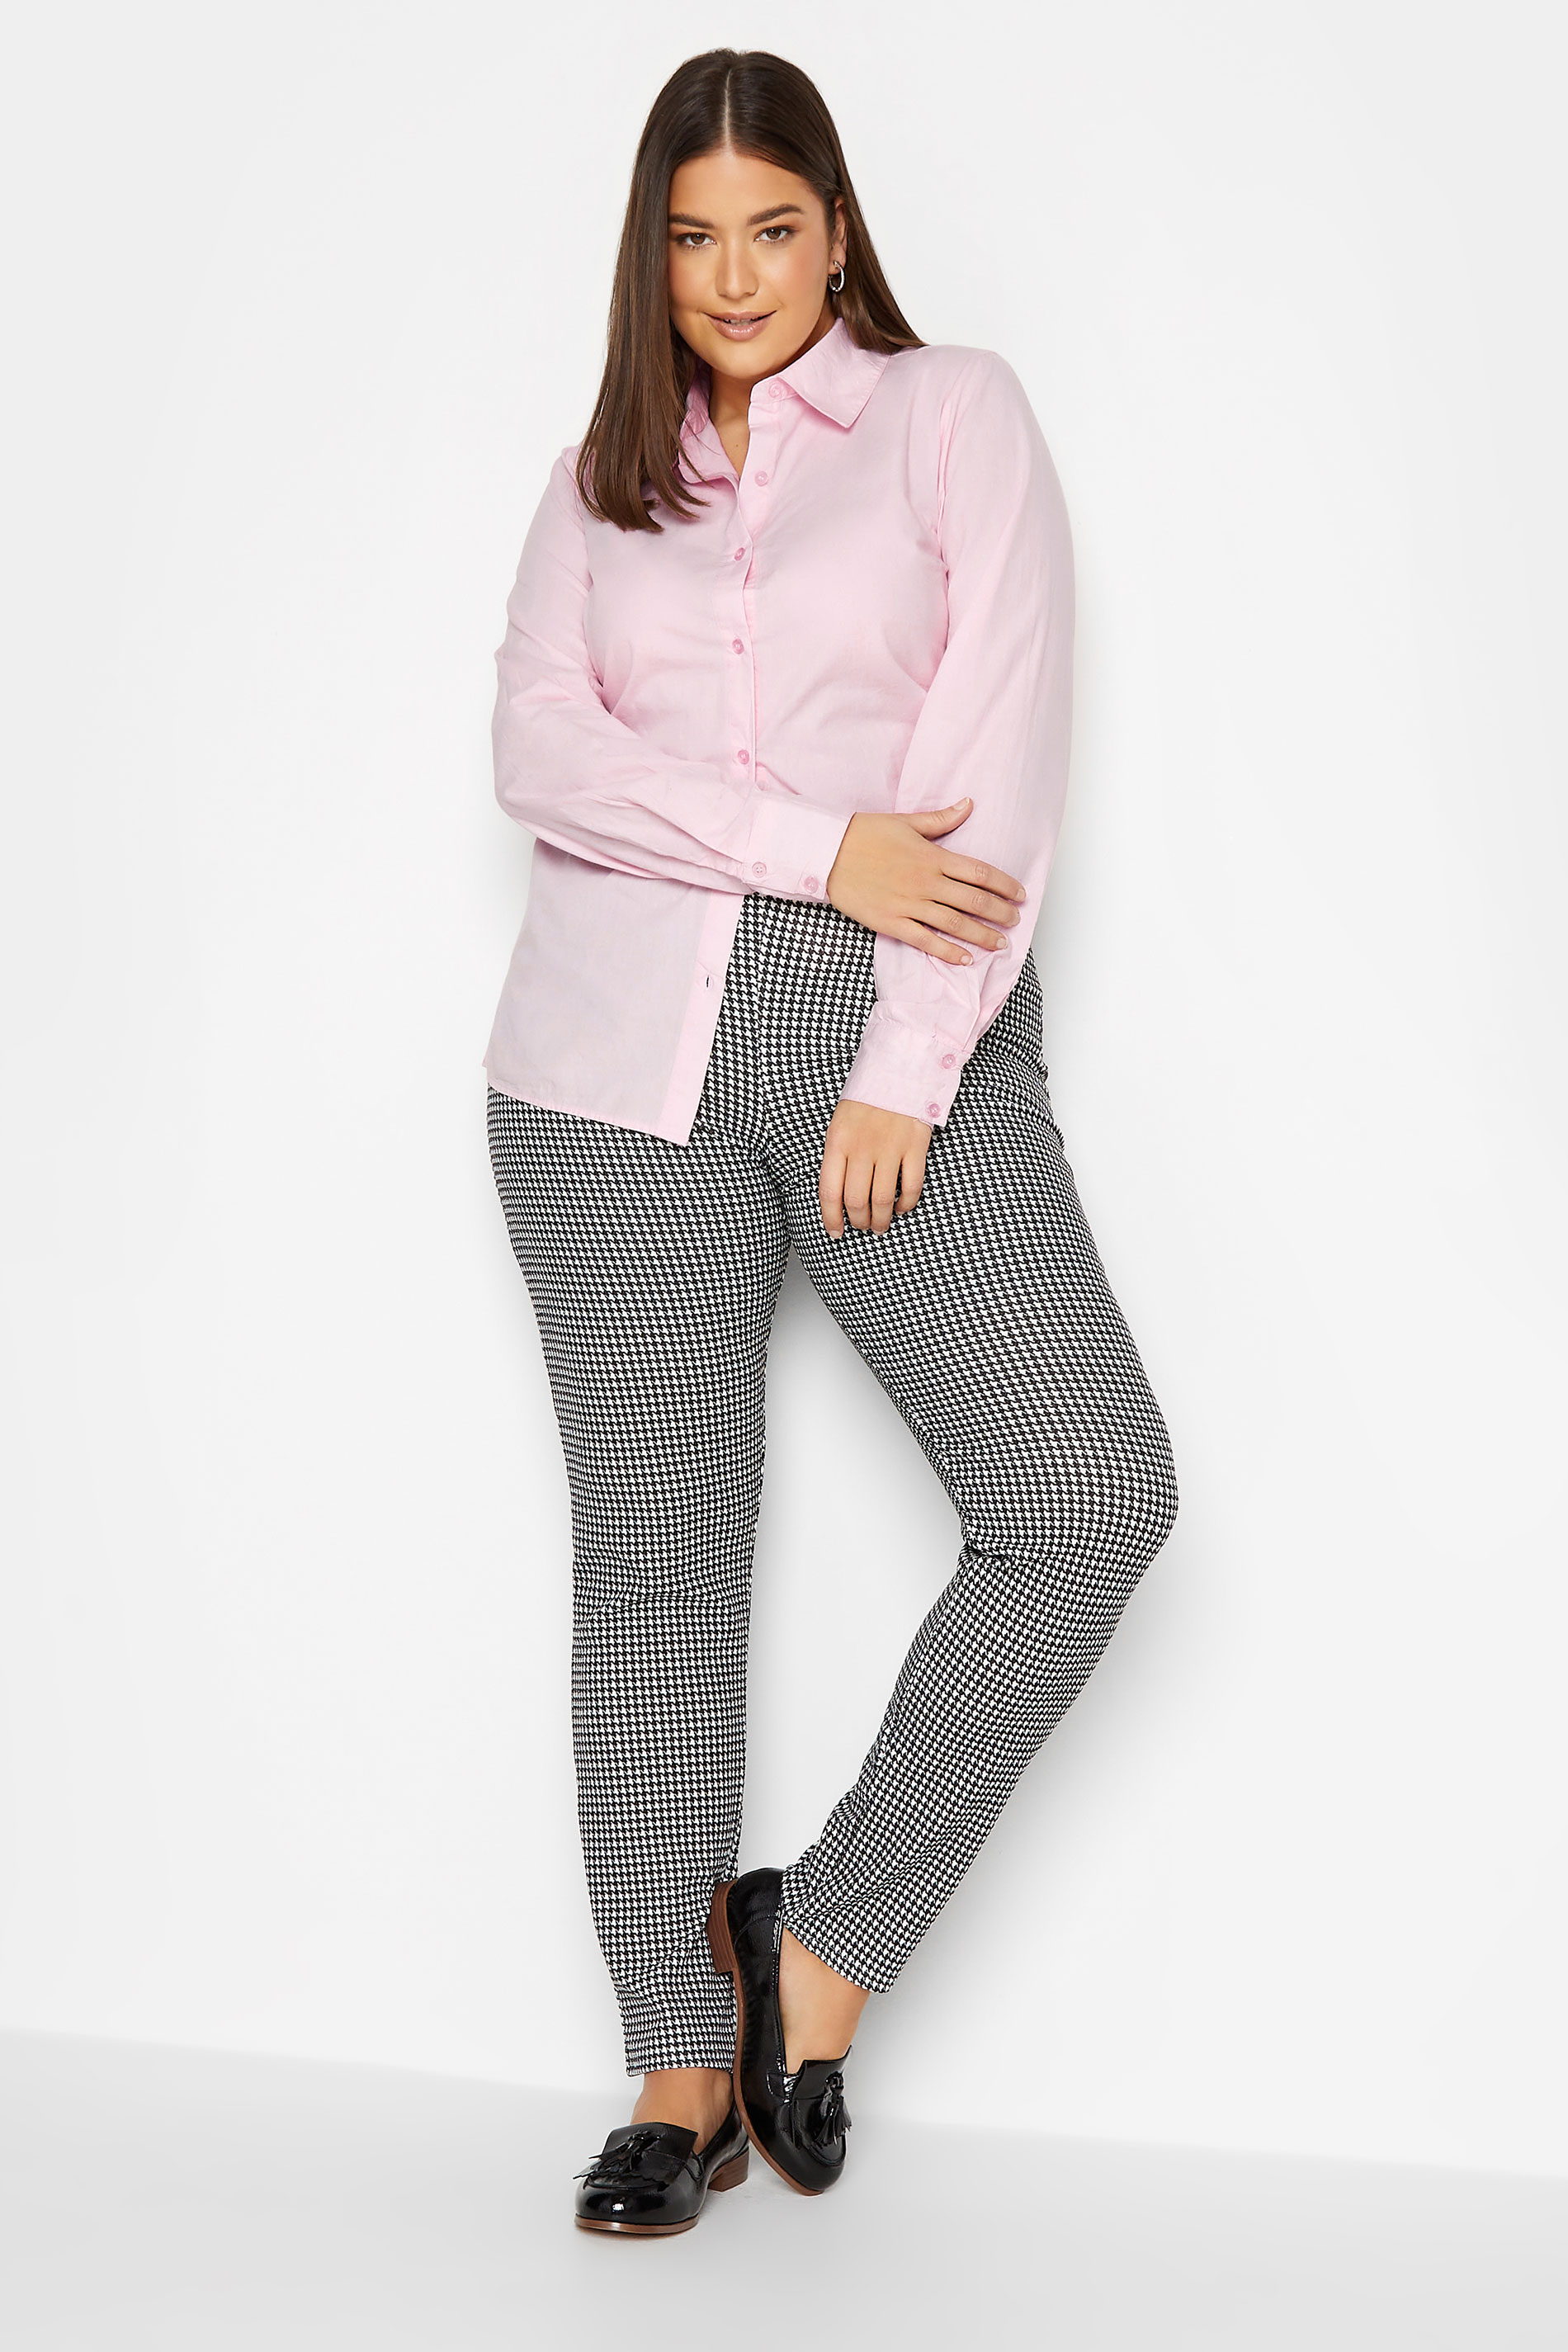 LTS Tall Women's Blush Pink Fitted Cotton Shirt | Long Tall Sally  2